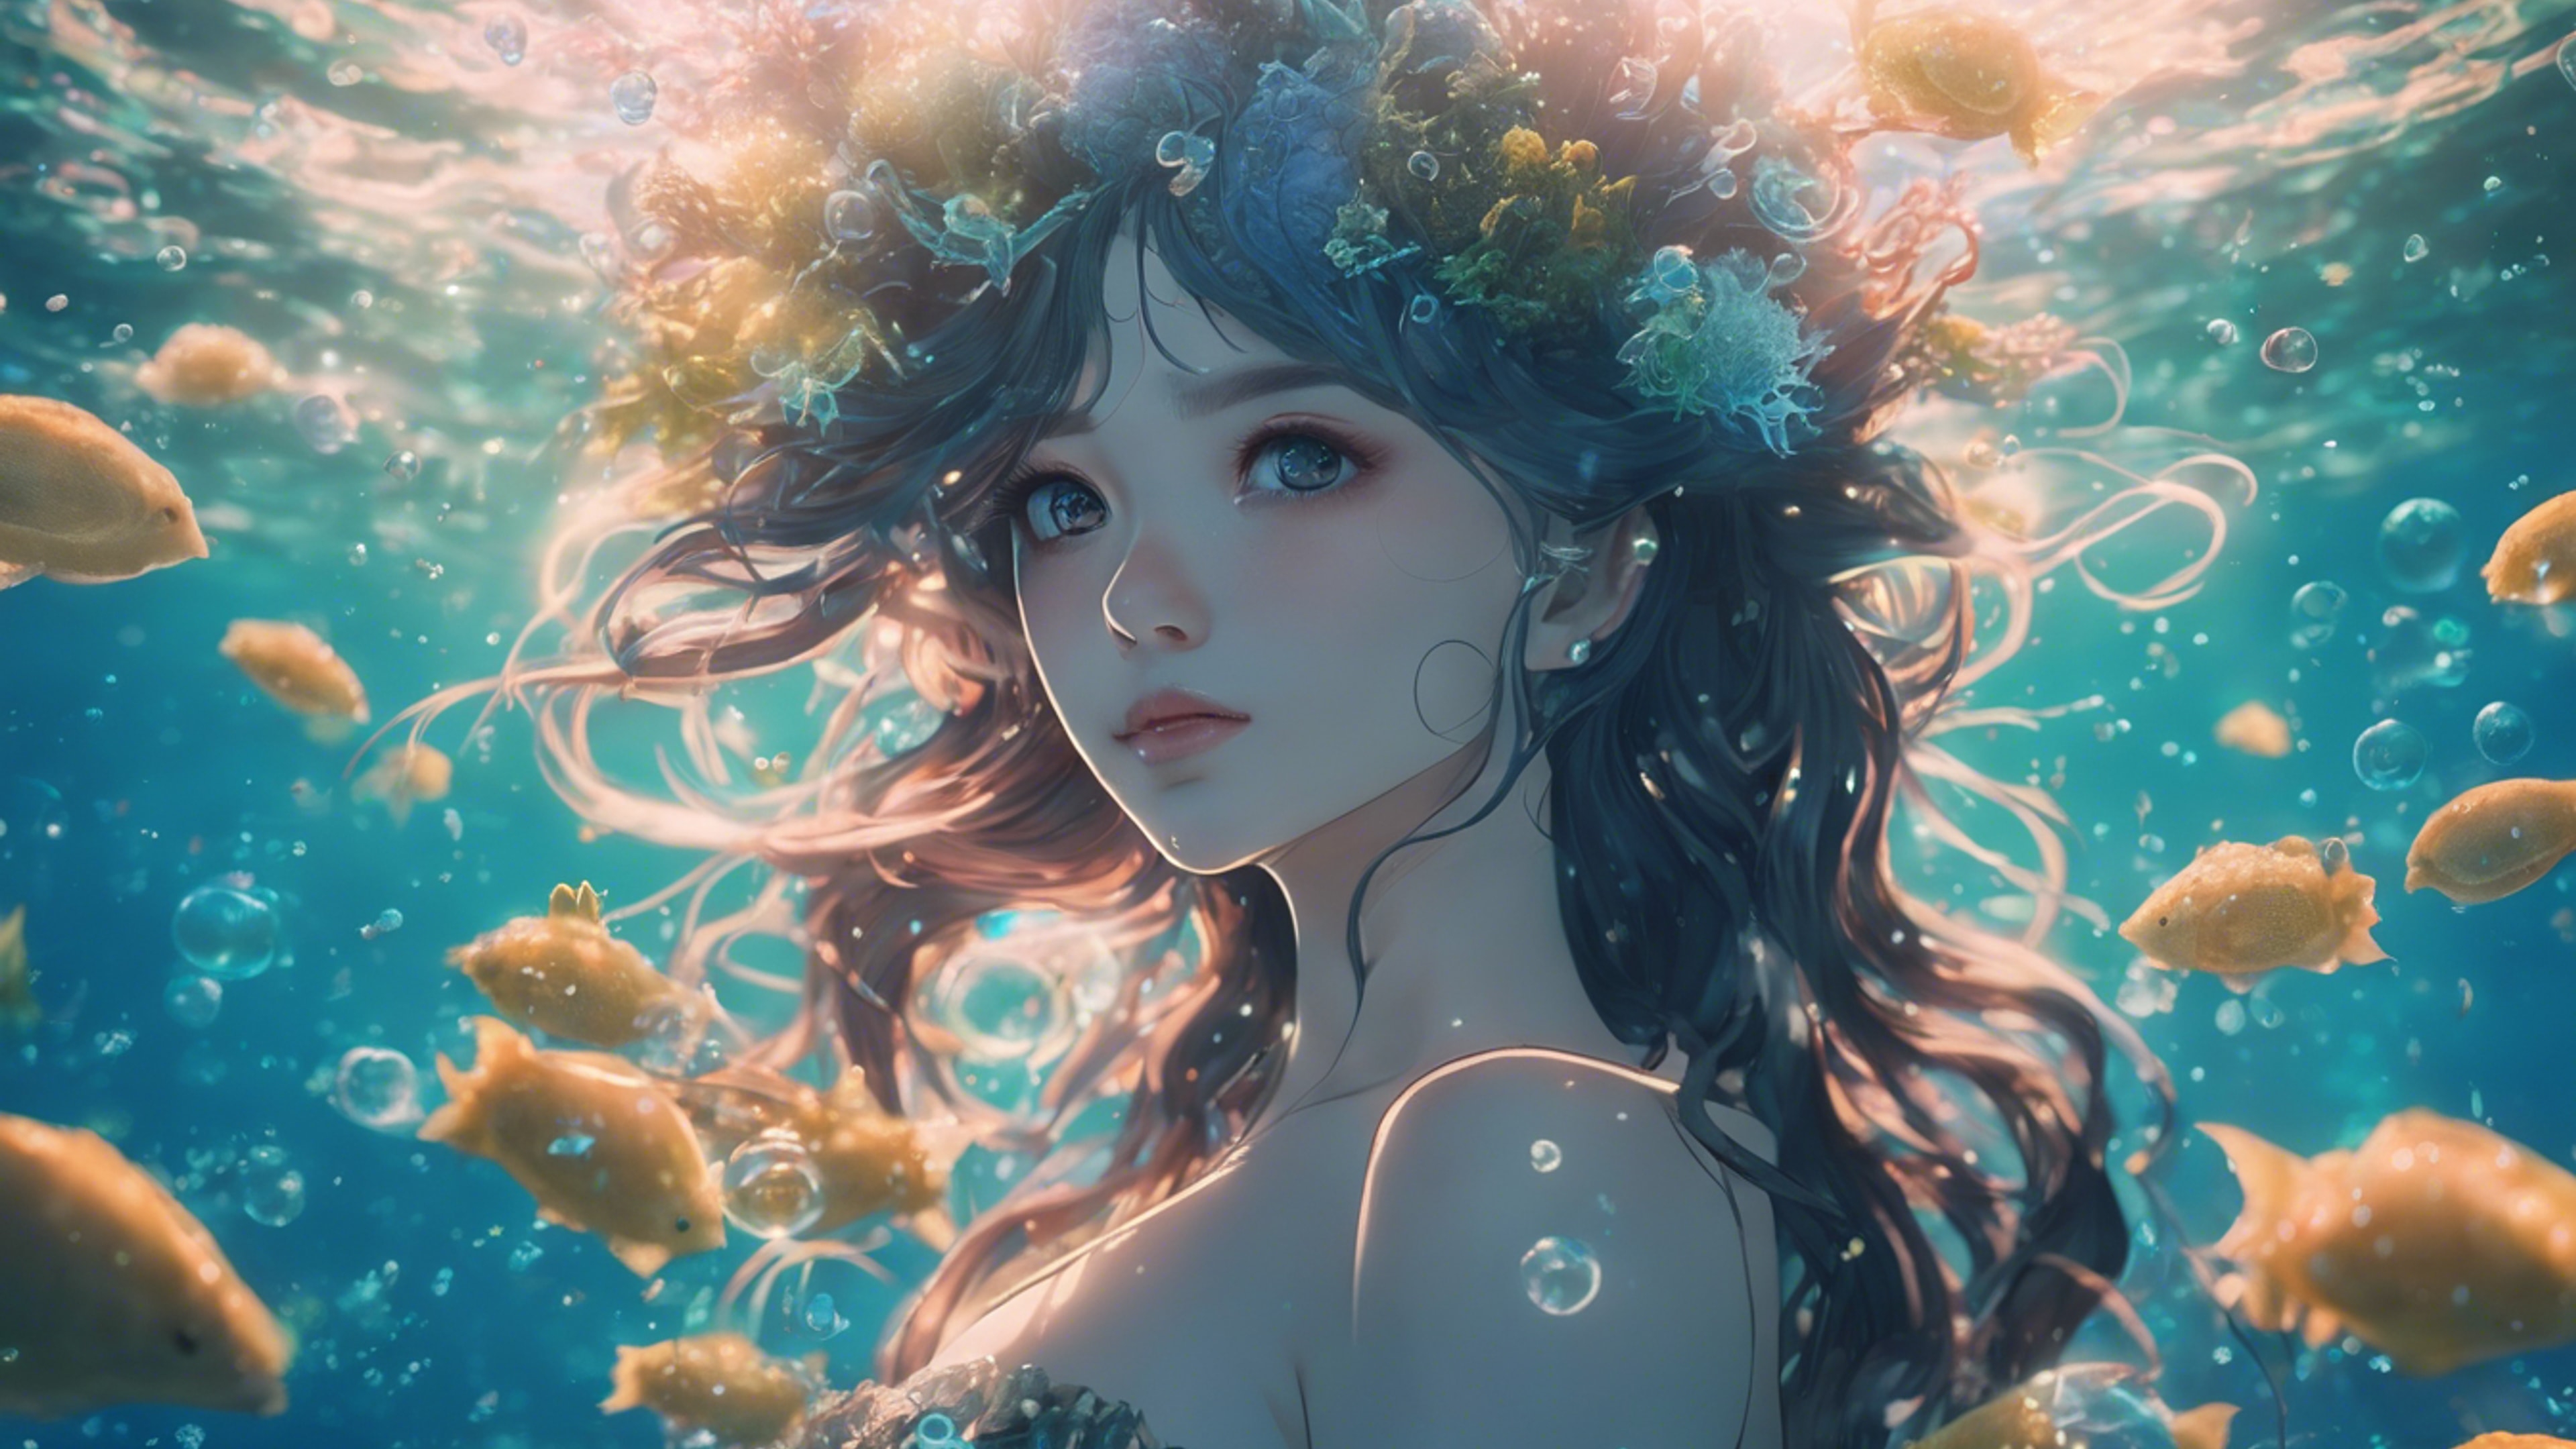 Anime-inspired underwater mermaid kingdom glittering with bioluminescent organisms. Wallpaper[b6d868a85fc94f08be6c]